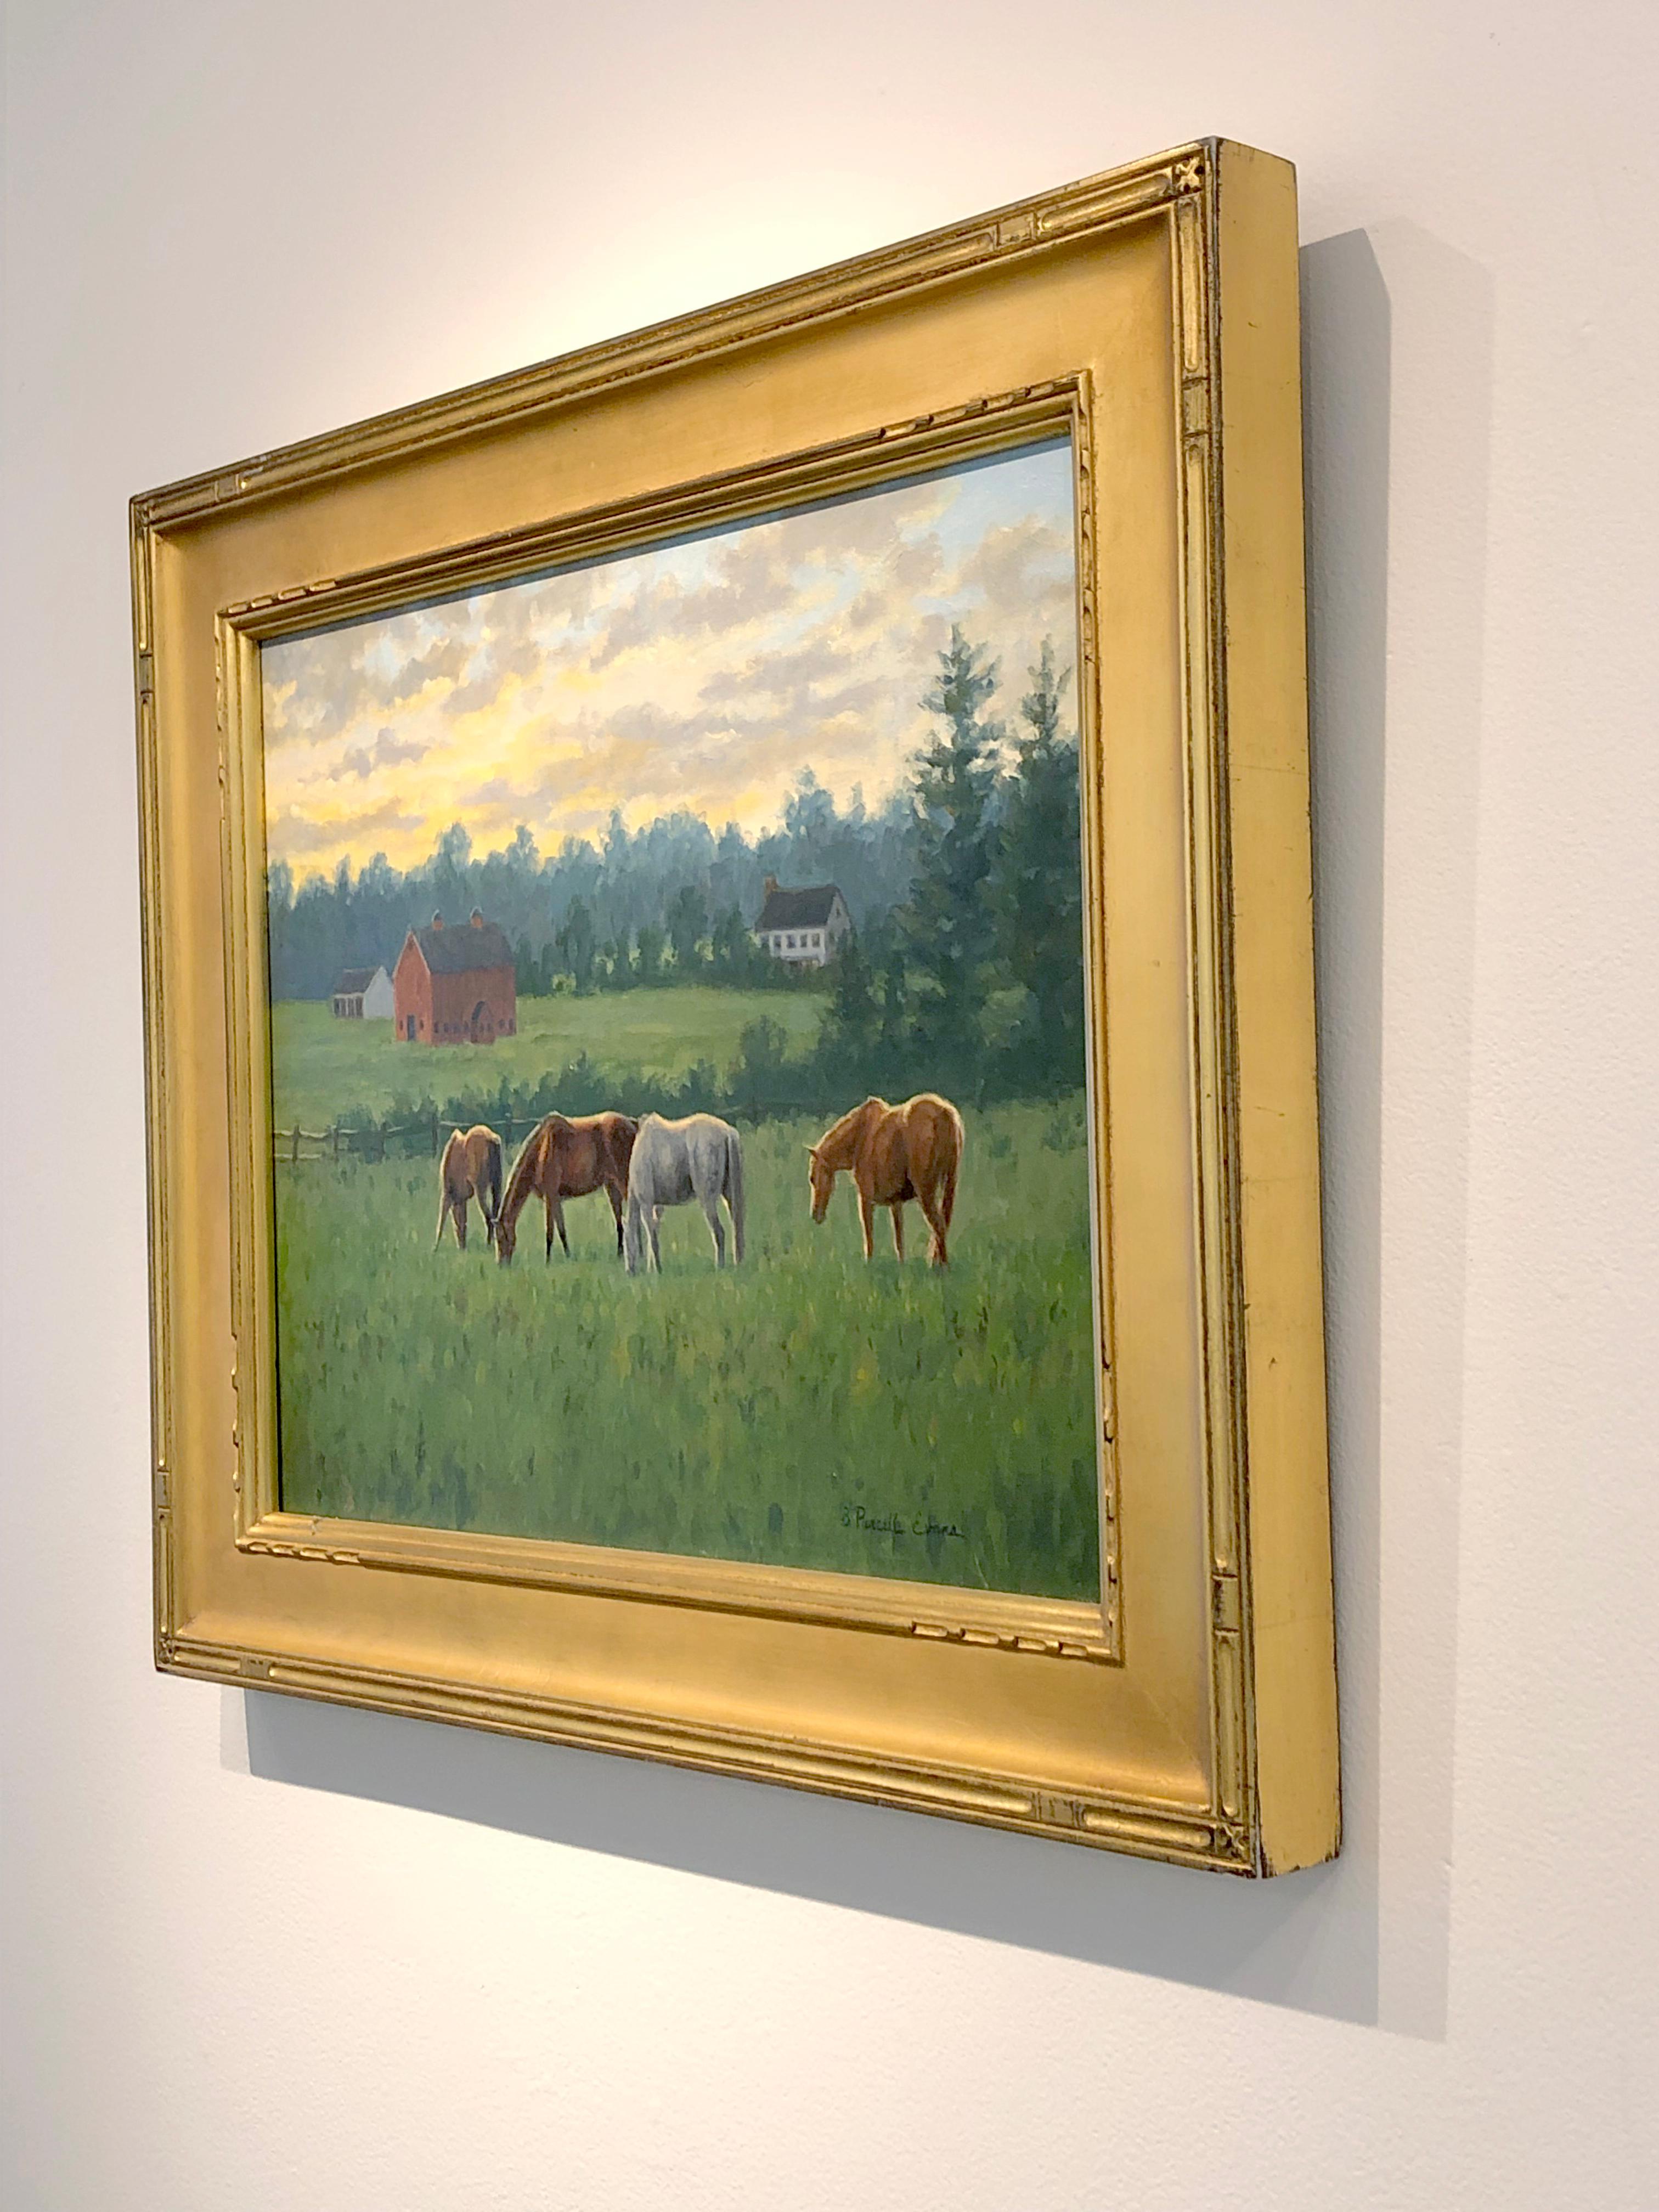 Beth Parcell, „Peaceful Evening“, 16x20 Equine-Pferd-Bauernlandschaft, Ölgemälde (Realismus), Painting, von Beth Parcell 